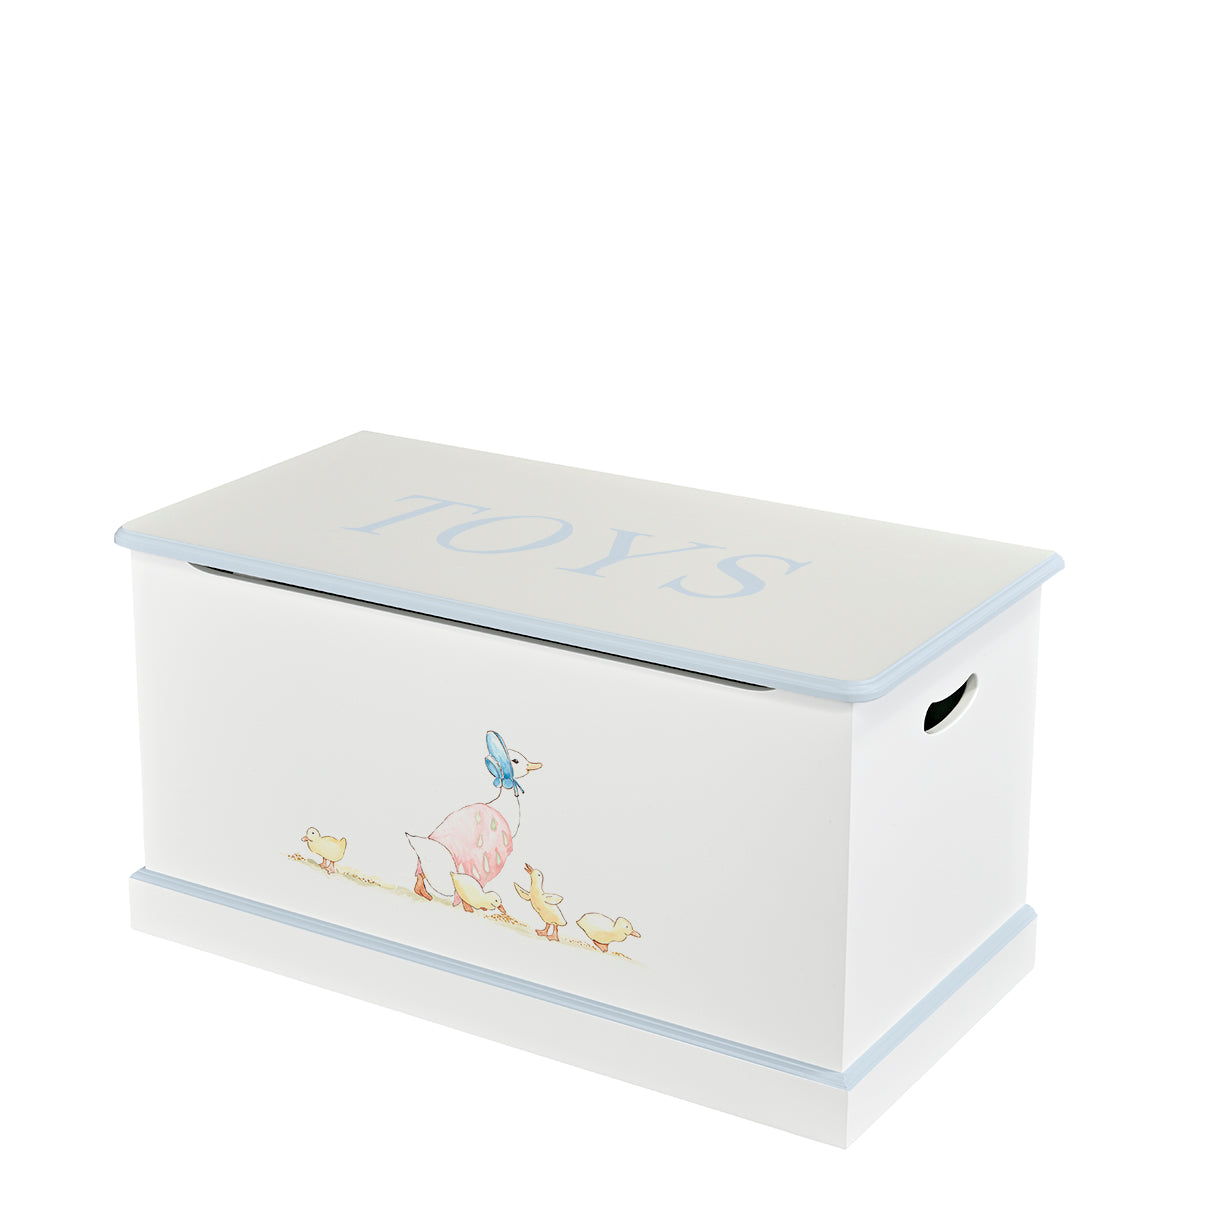 Cambridge Toy box - Beatrix Potter with Blissful Blue Trim